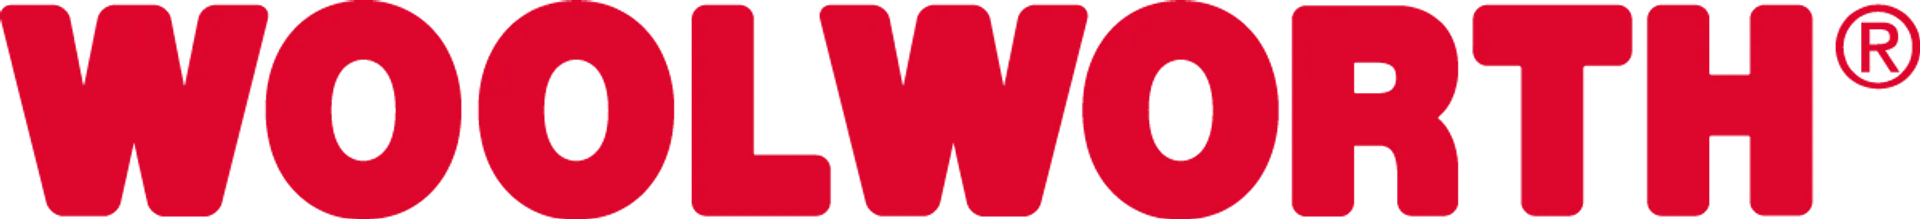 WOOLWORTH logo